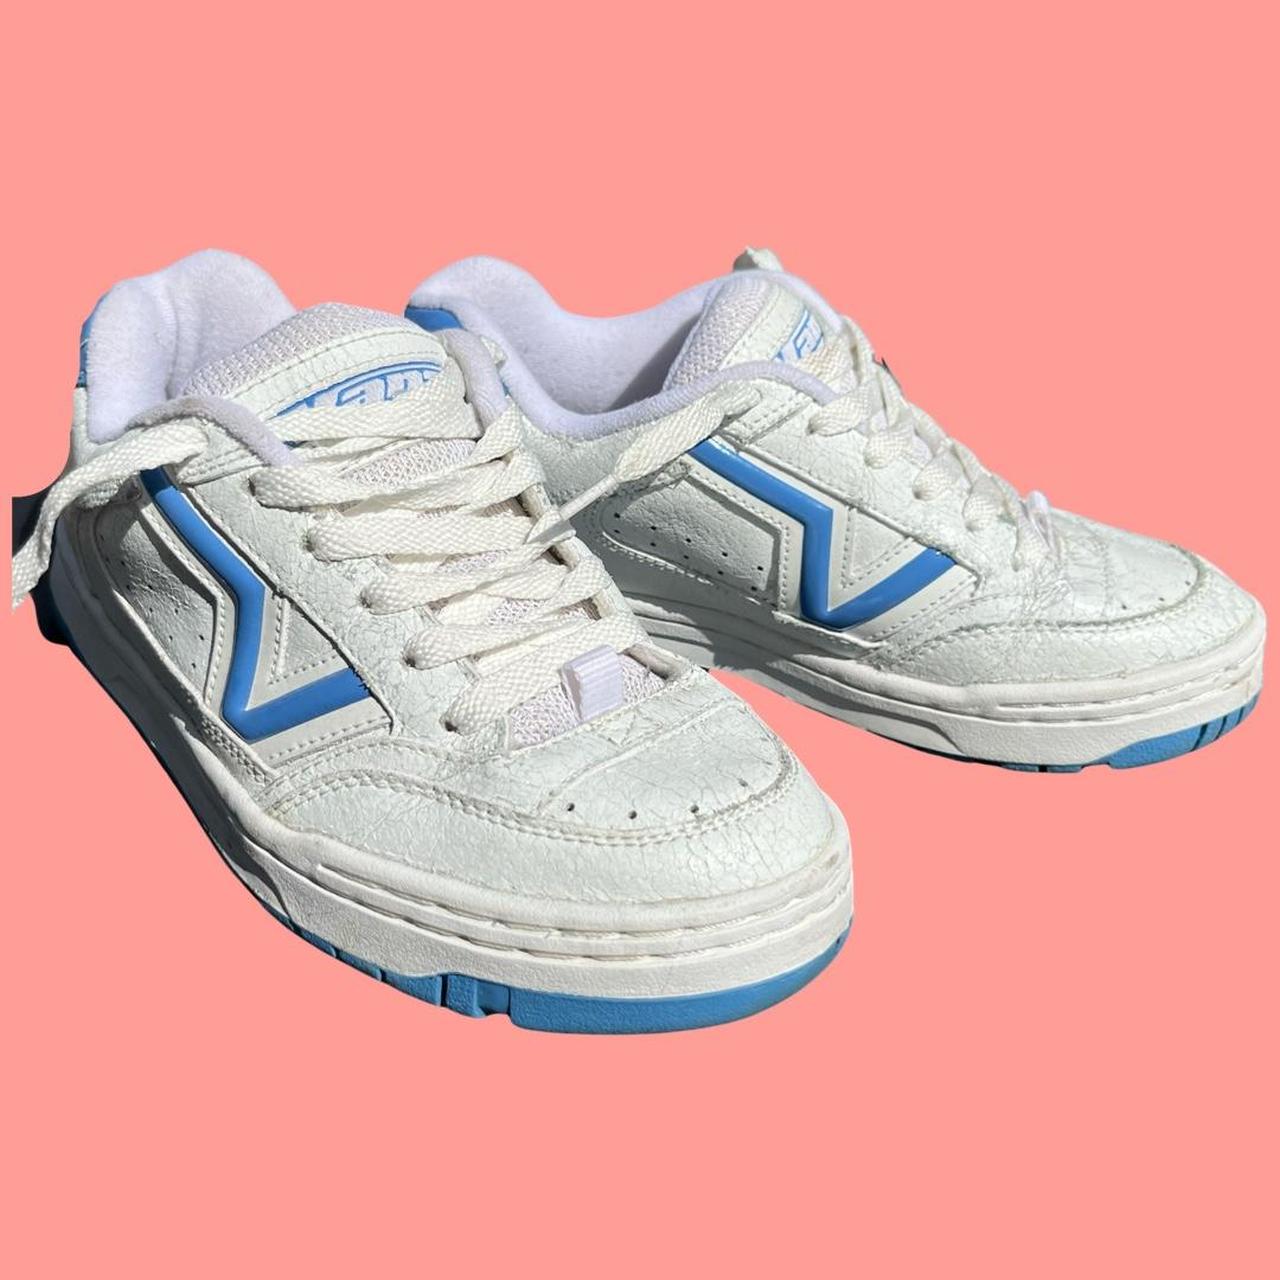 Vintage 90s Redmond Vans Chunky Skate Shoe Size: - Depop